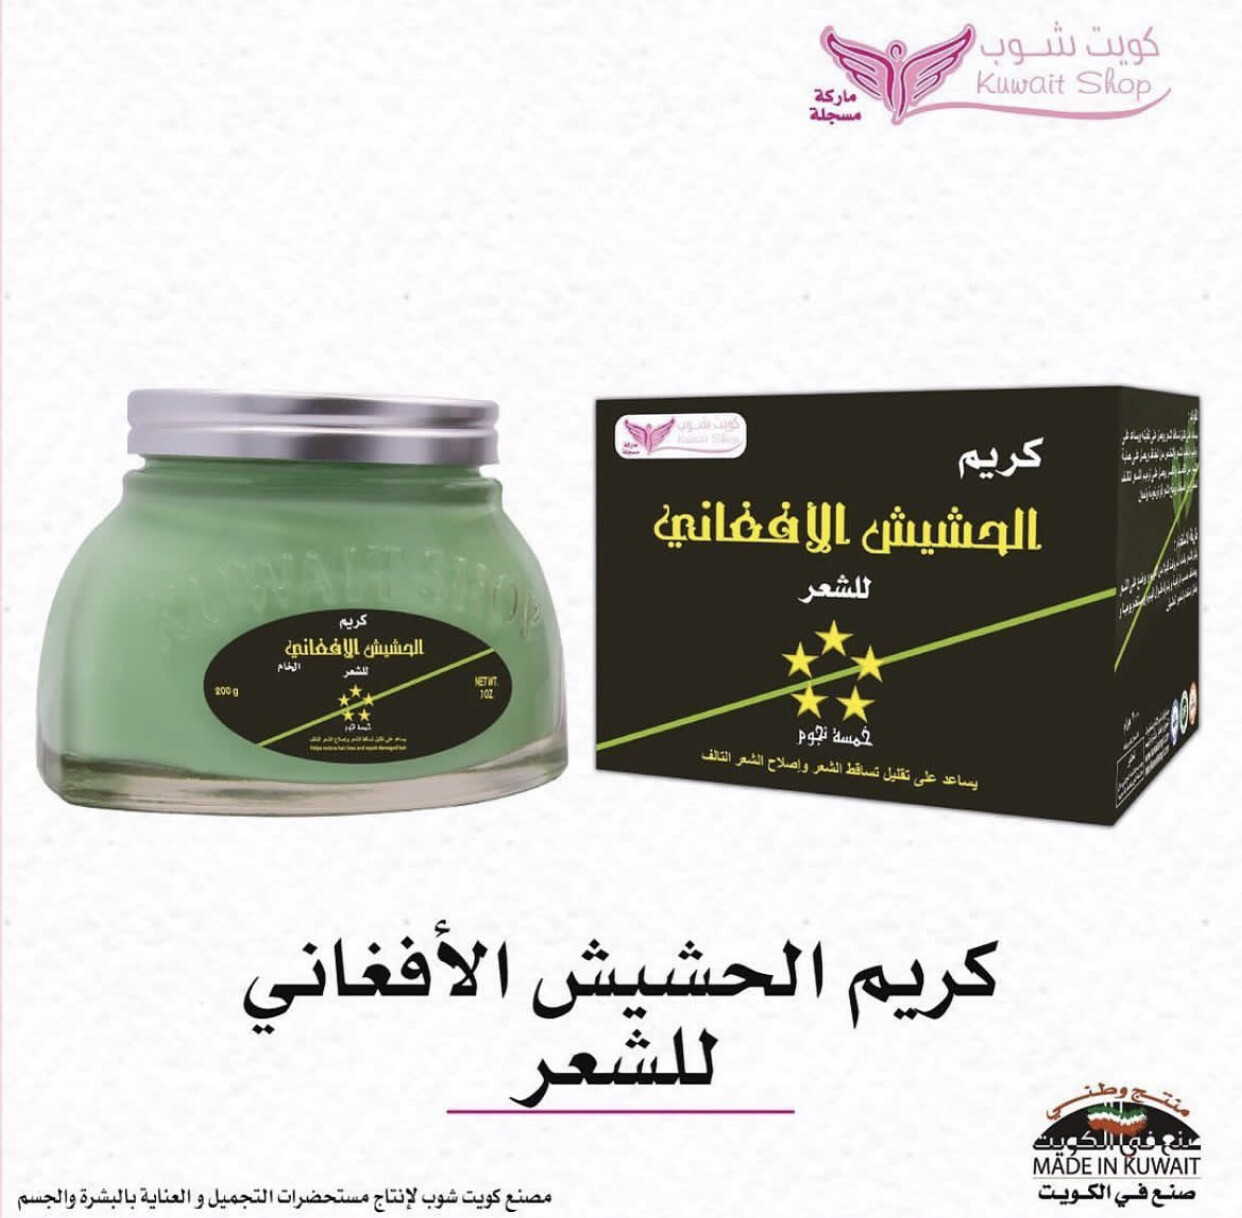 Afghan Hashish }Cream for hair by Kuwait Shop كريم الحشيش الأفغاني للشعر